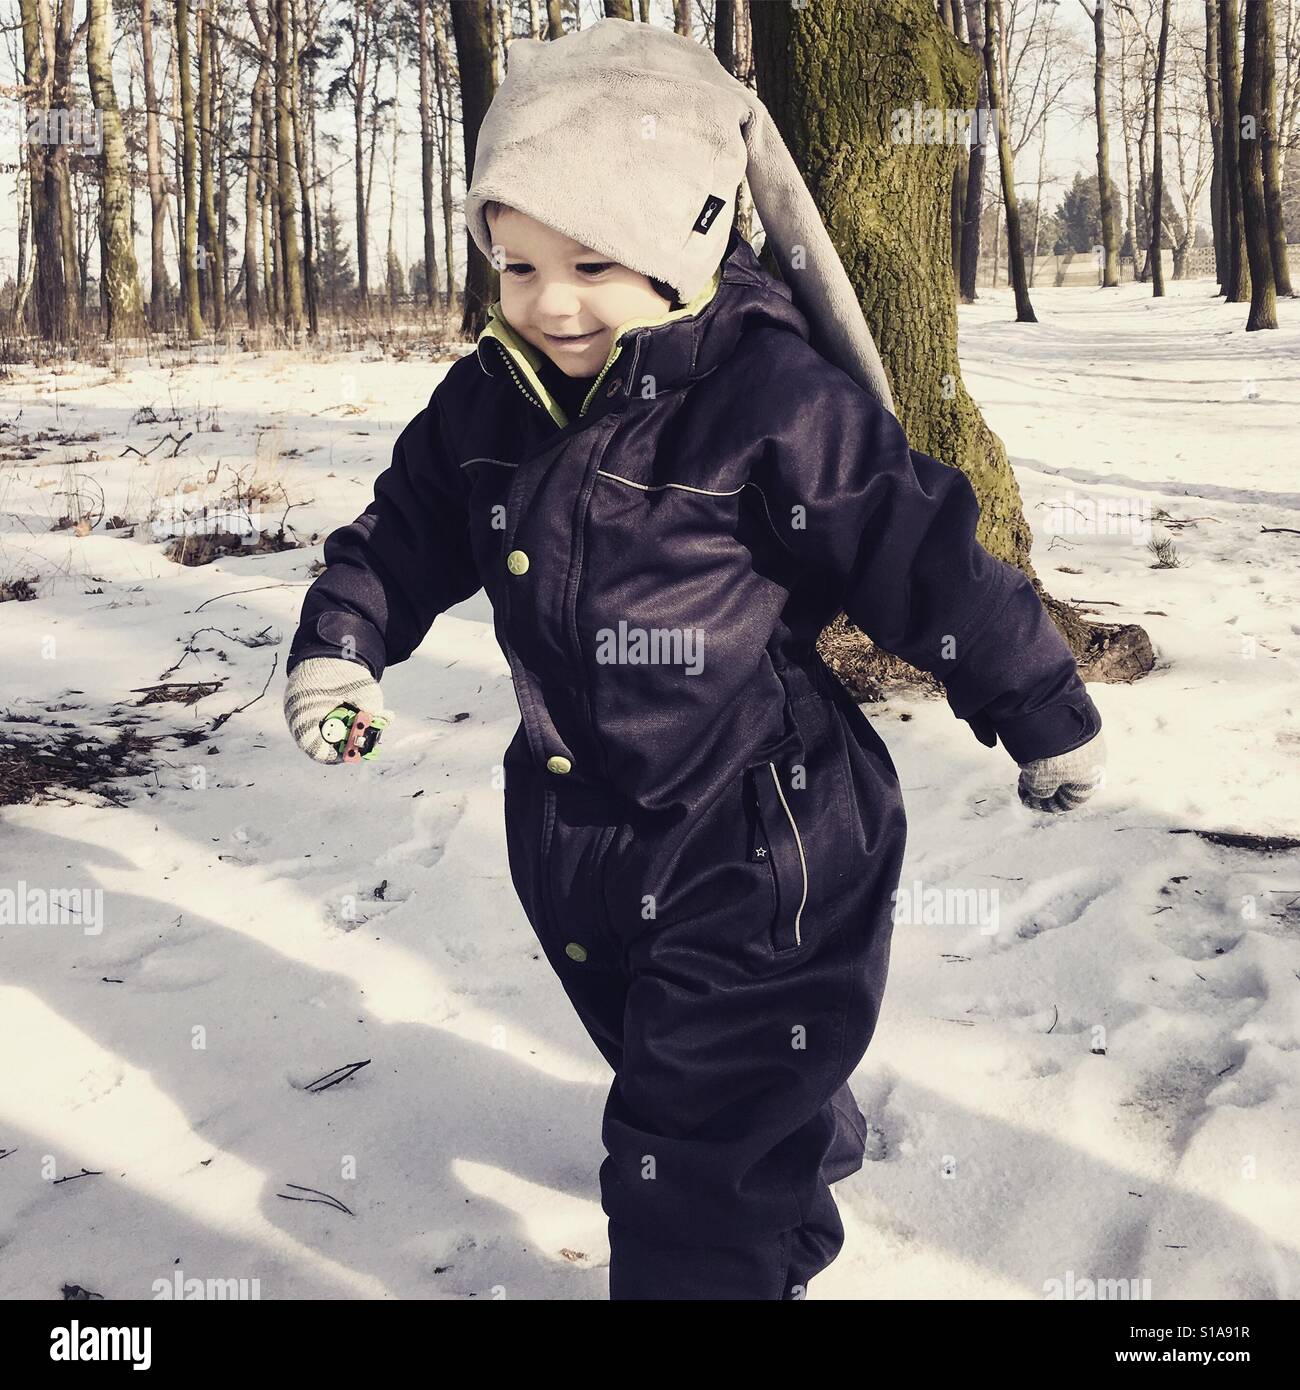 Toddler having fun in the snow Stock Photo